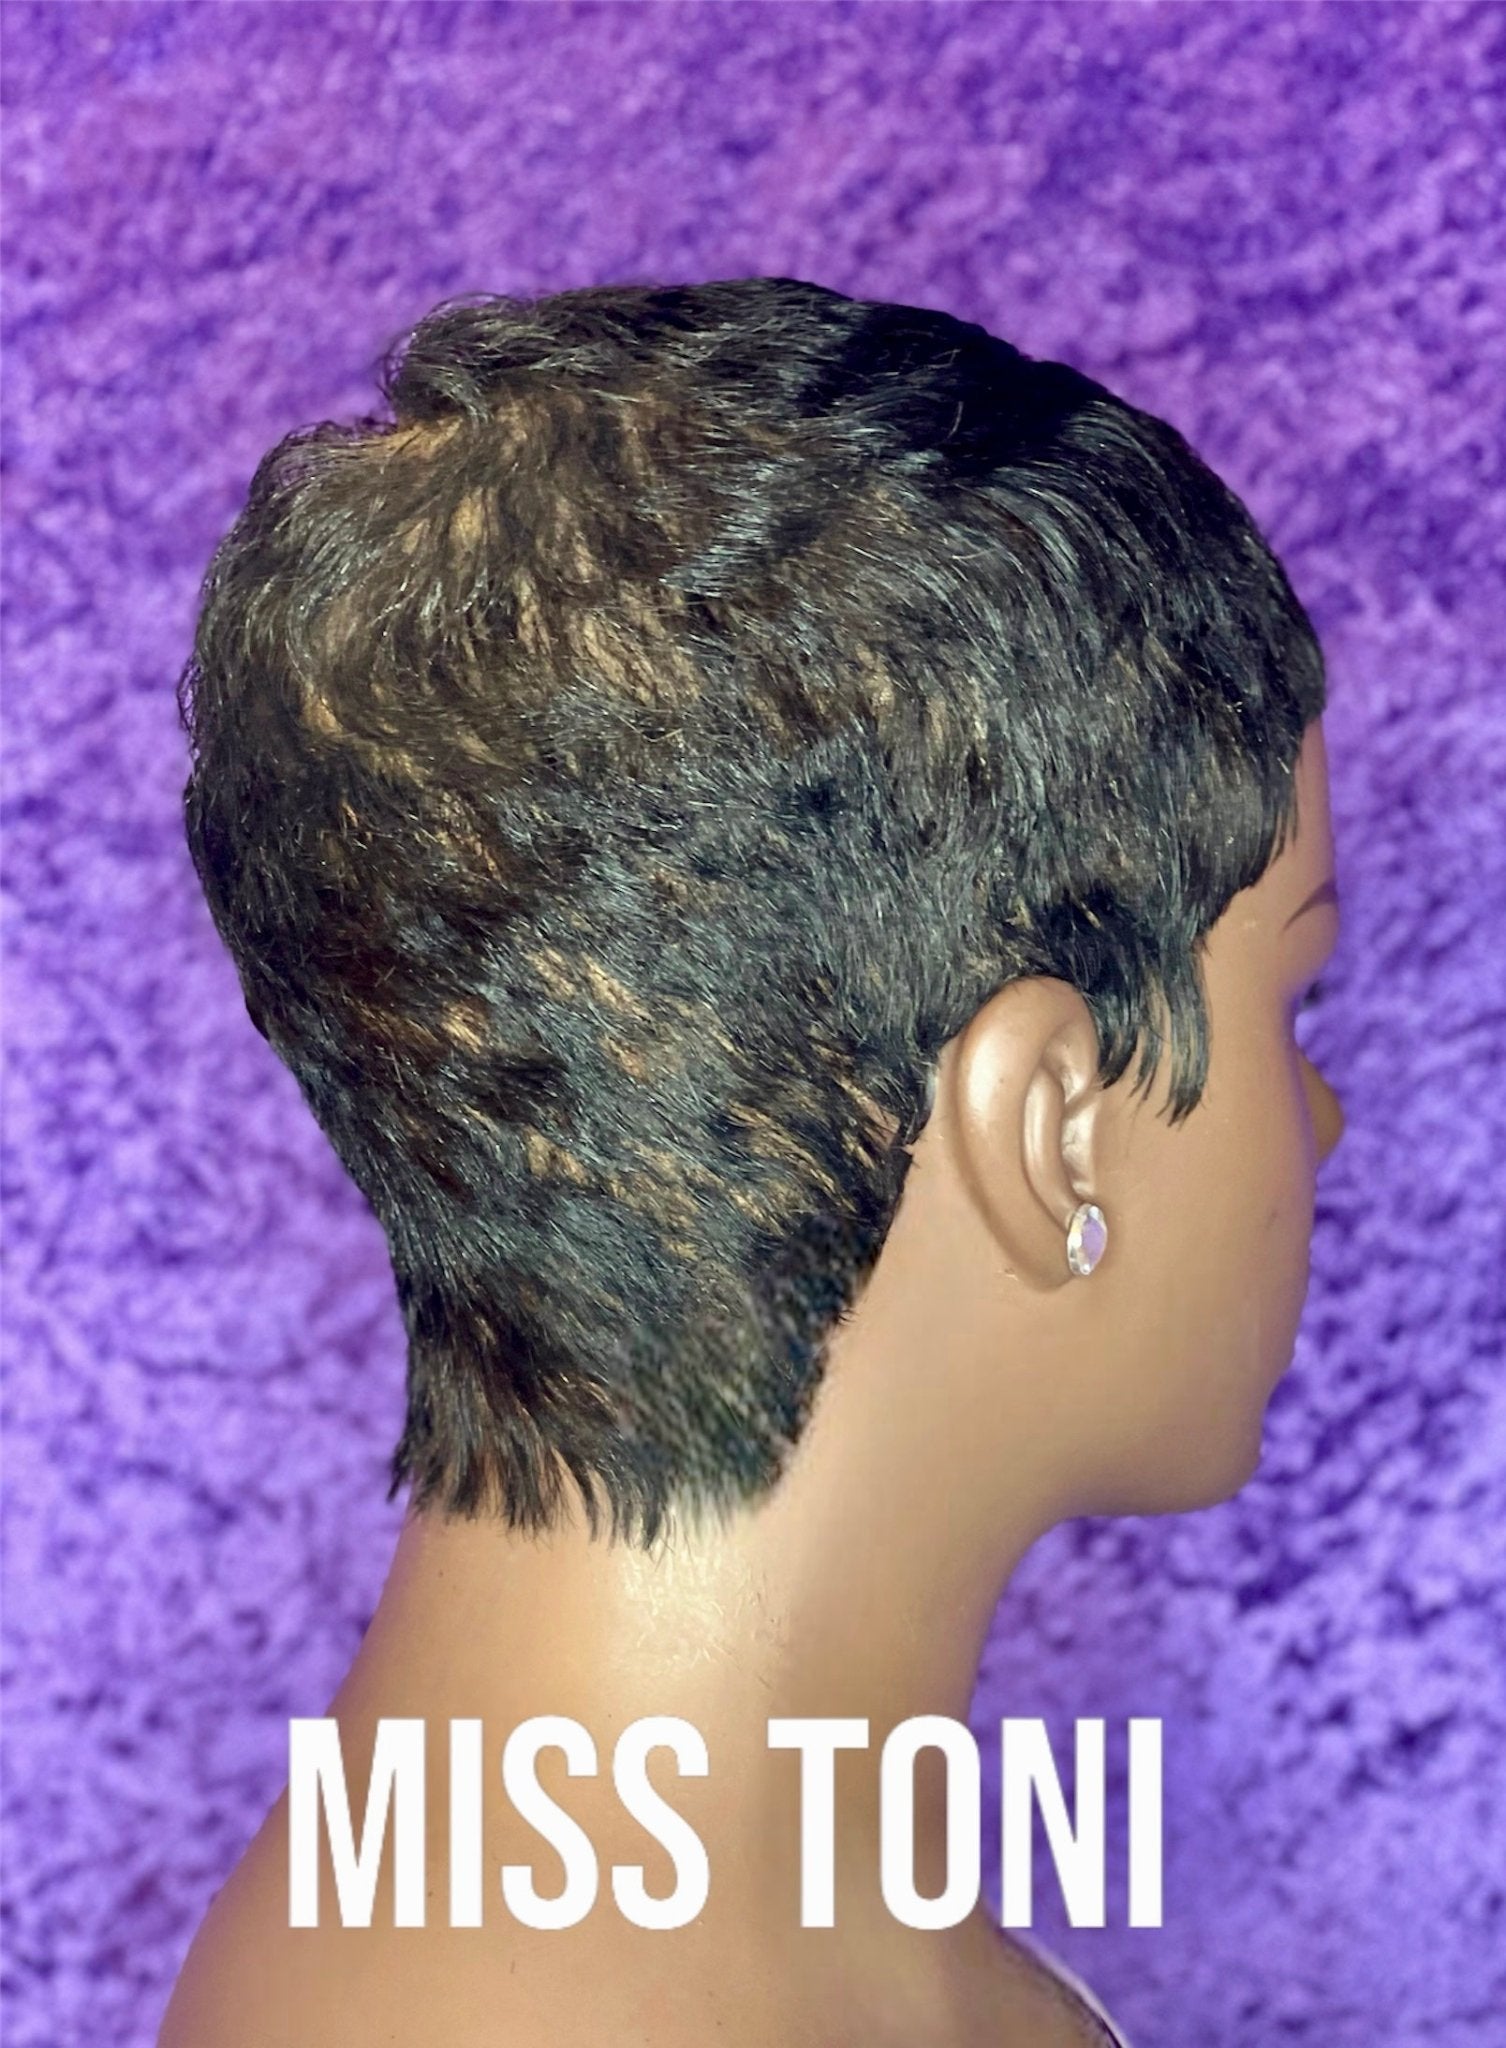 Miss Toni - Full Lace - Signature Specialty Salon